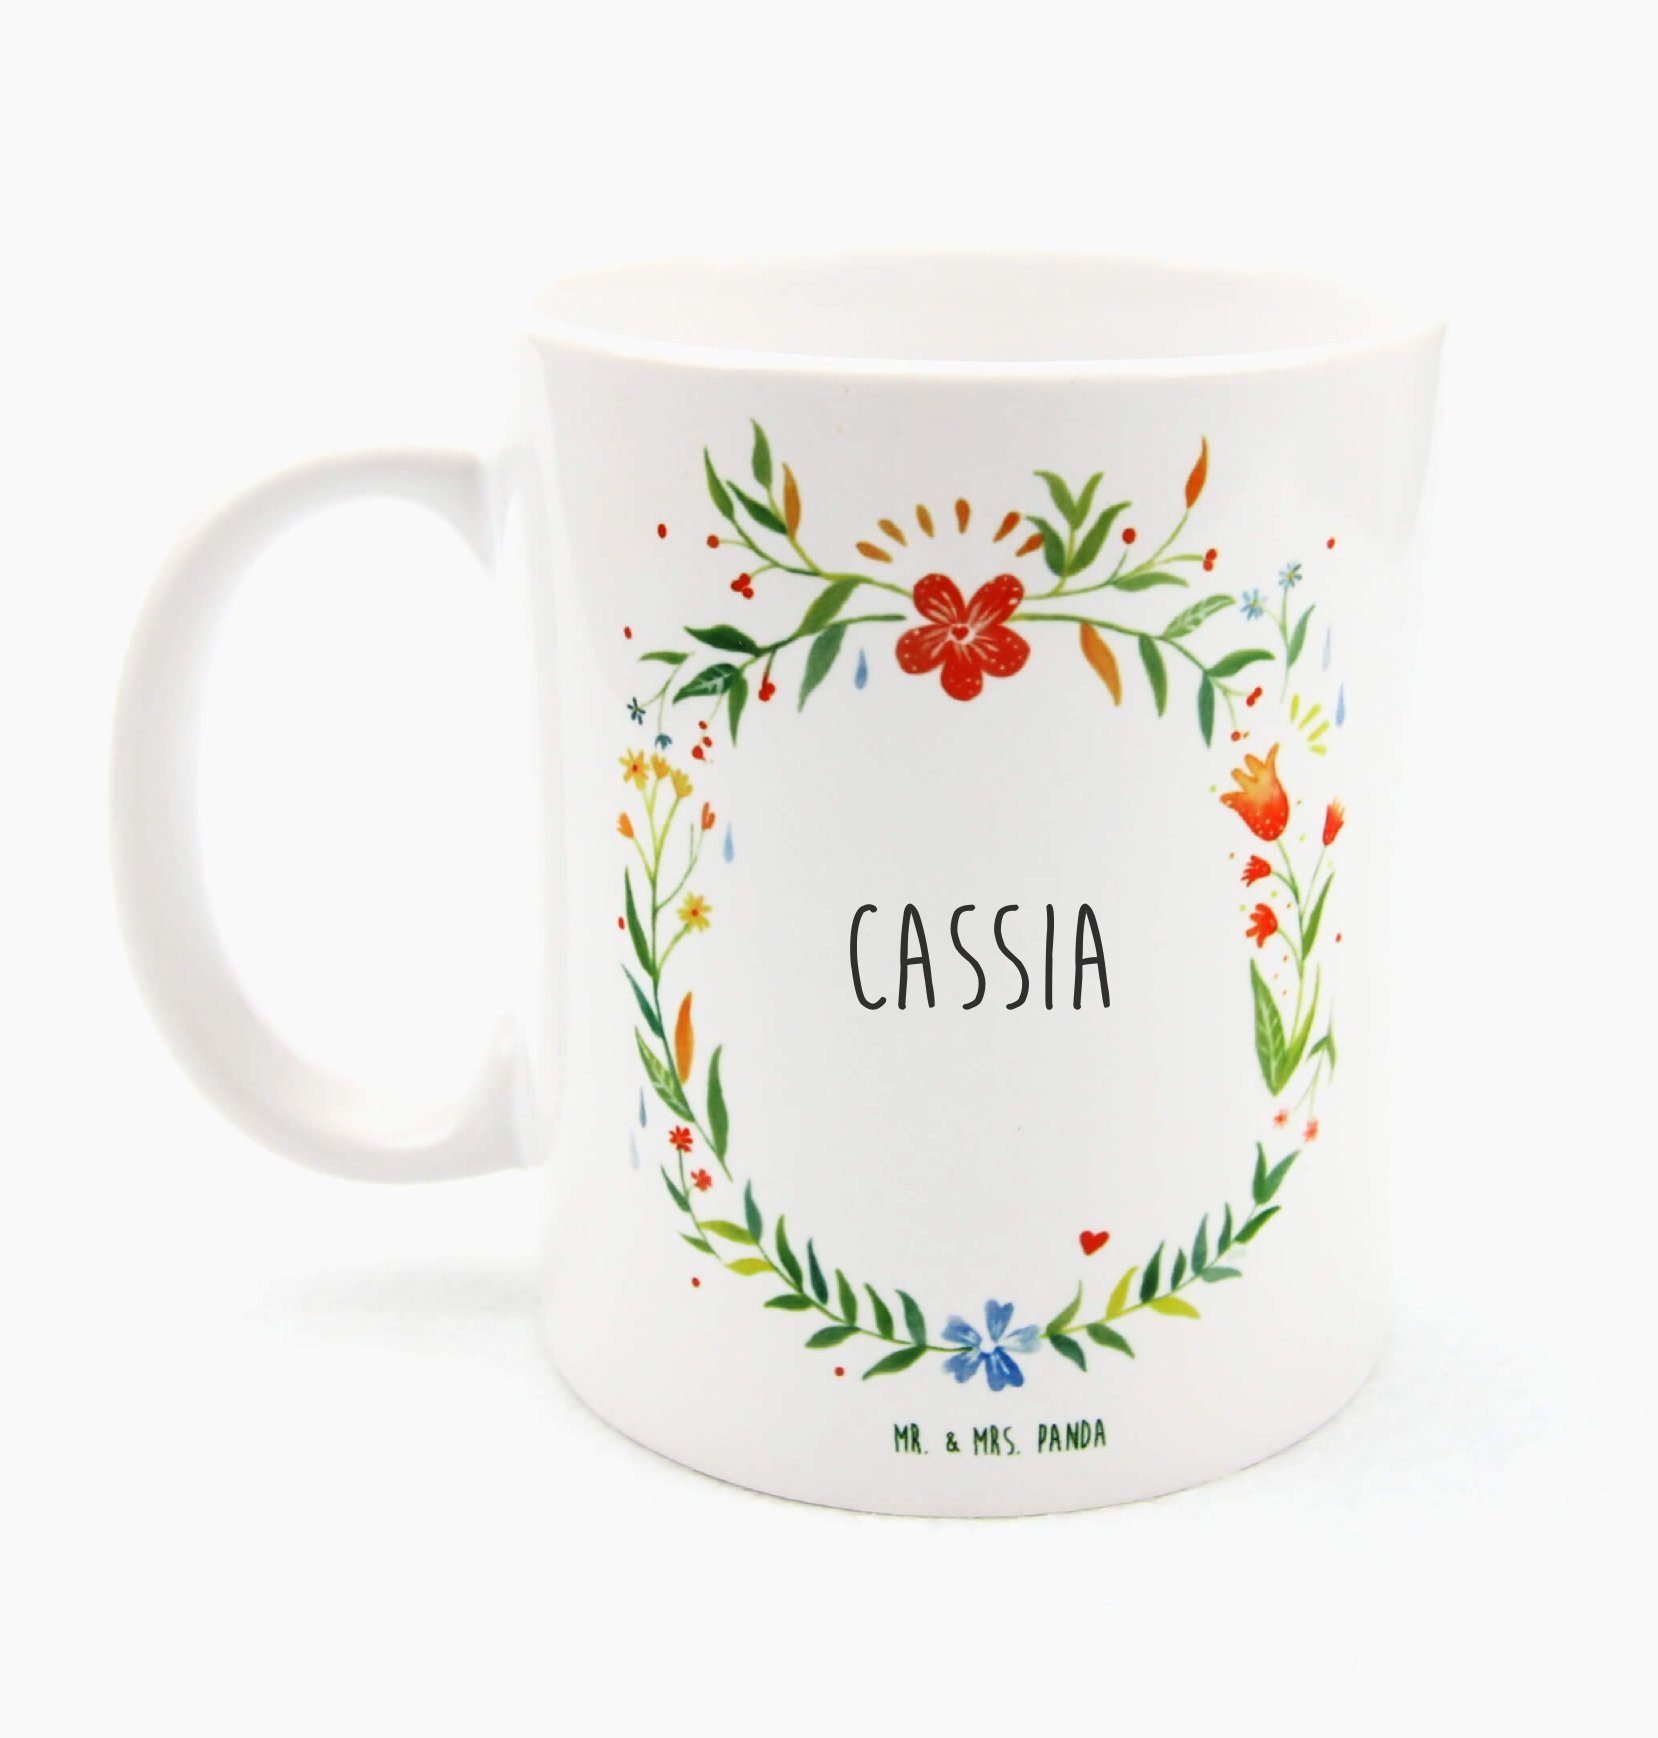 Mr. & Mrs. Panda Tasse Cassia - Geschenk, Porzellantasse, Geschenk Tasse, Büro Tasse, Kaffee, Keramik